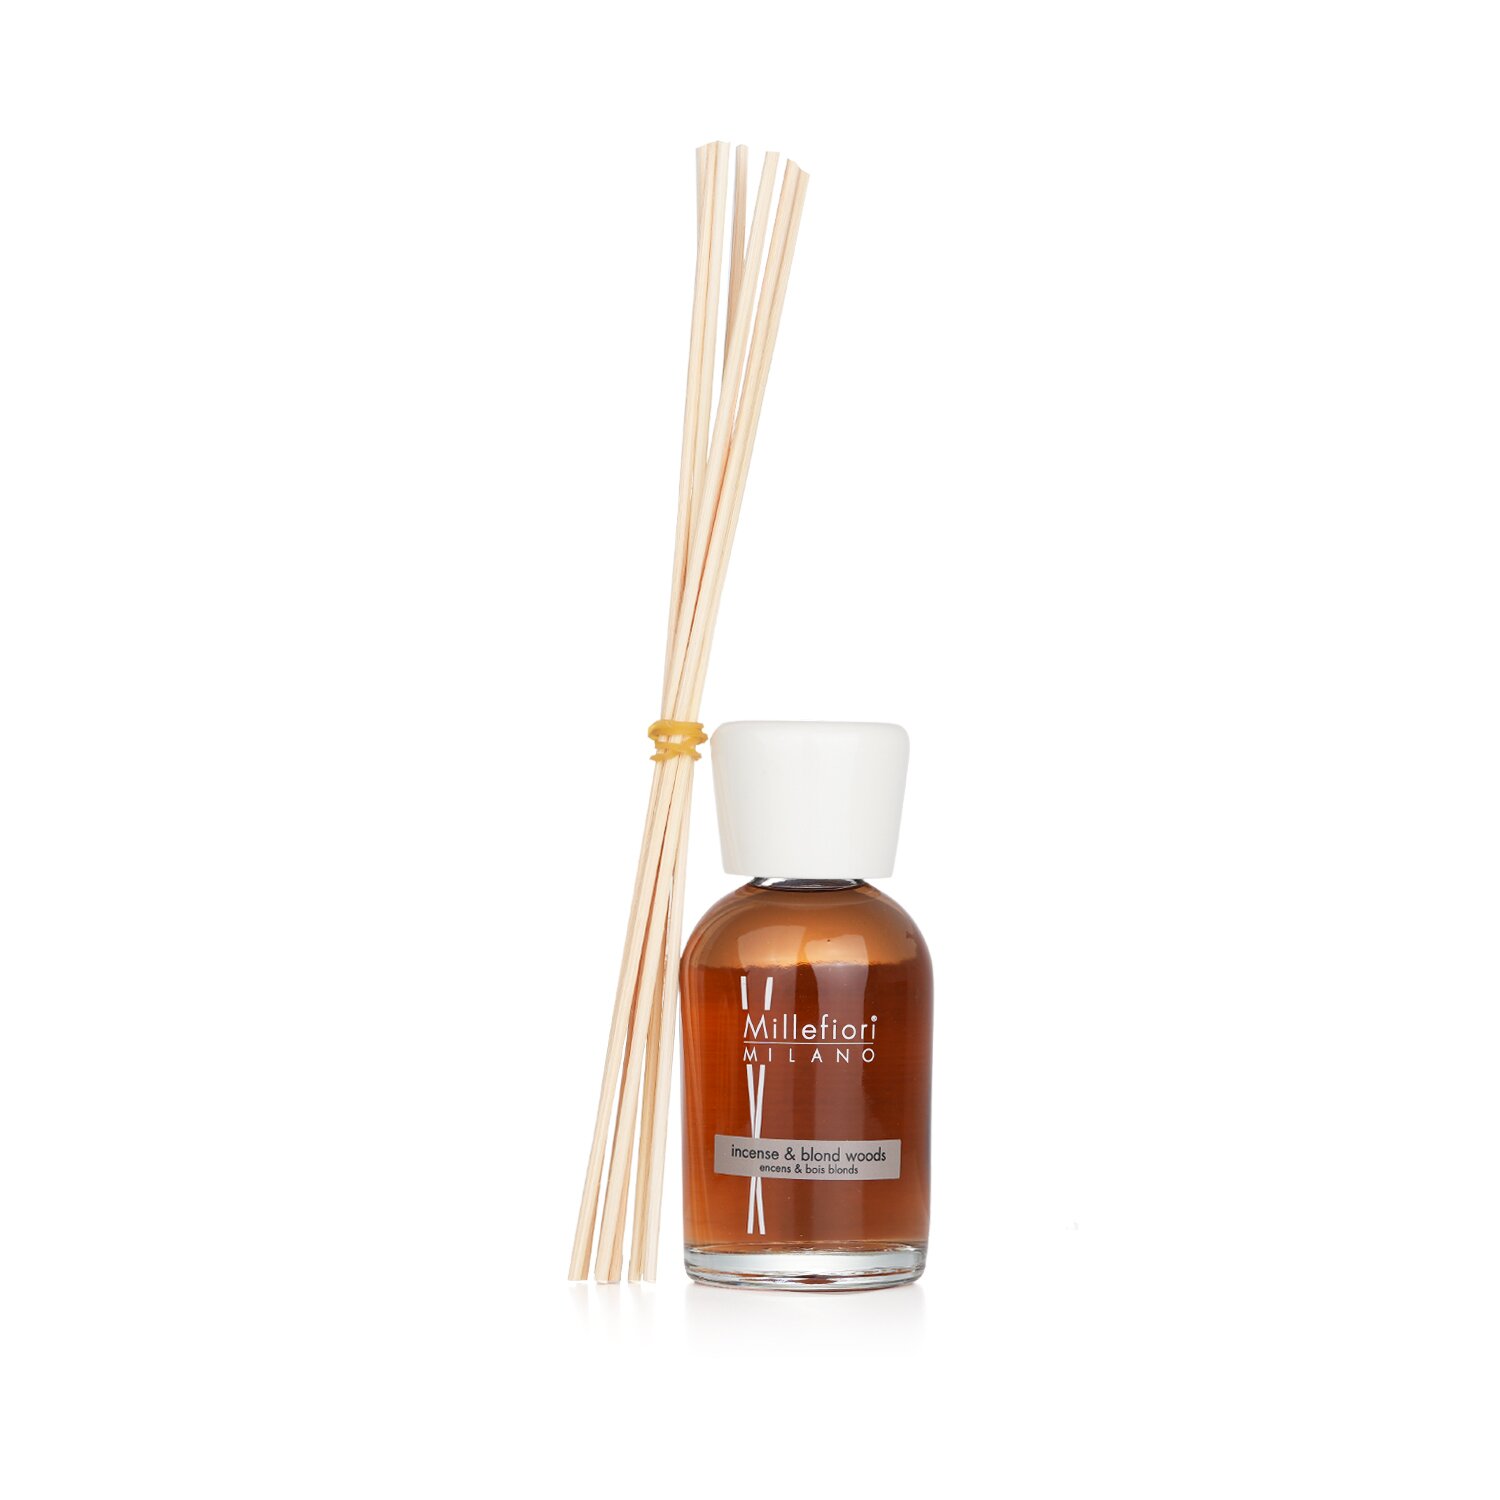 Millefiori Natural Fragrance Diffuser - Incense & Blond Woods 250ml/8.45oz